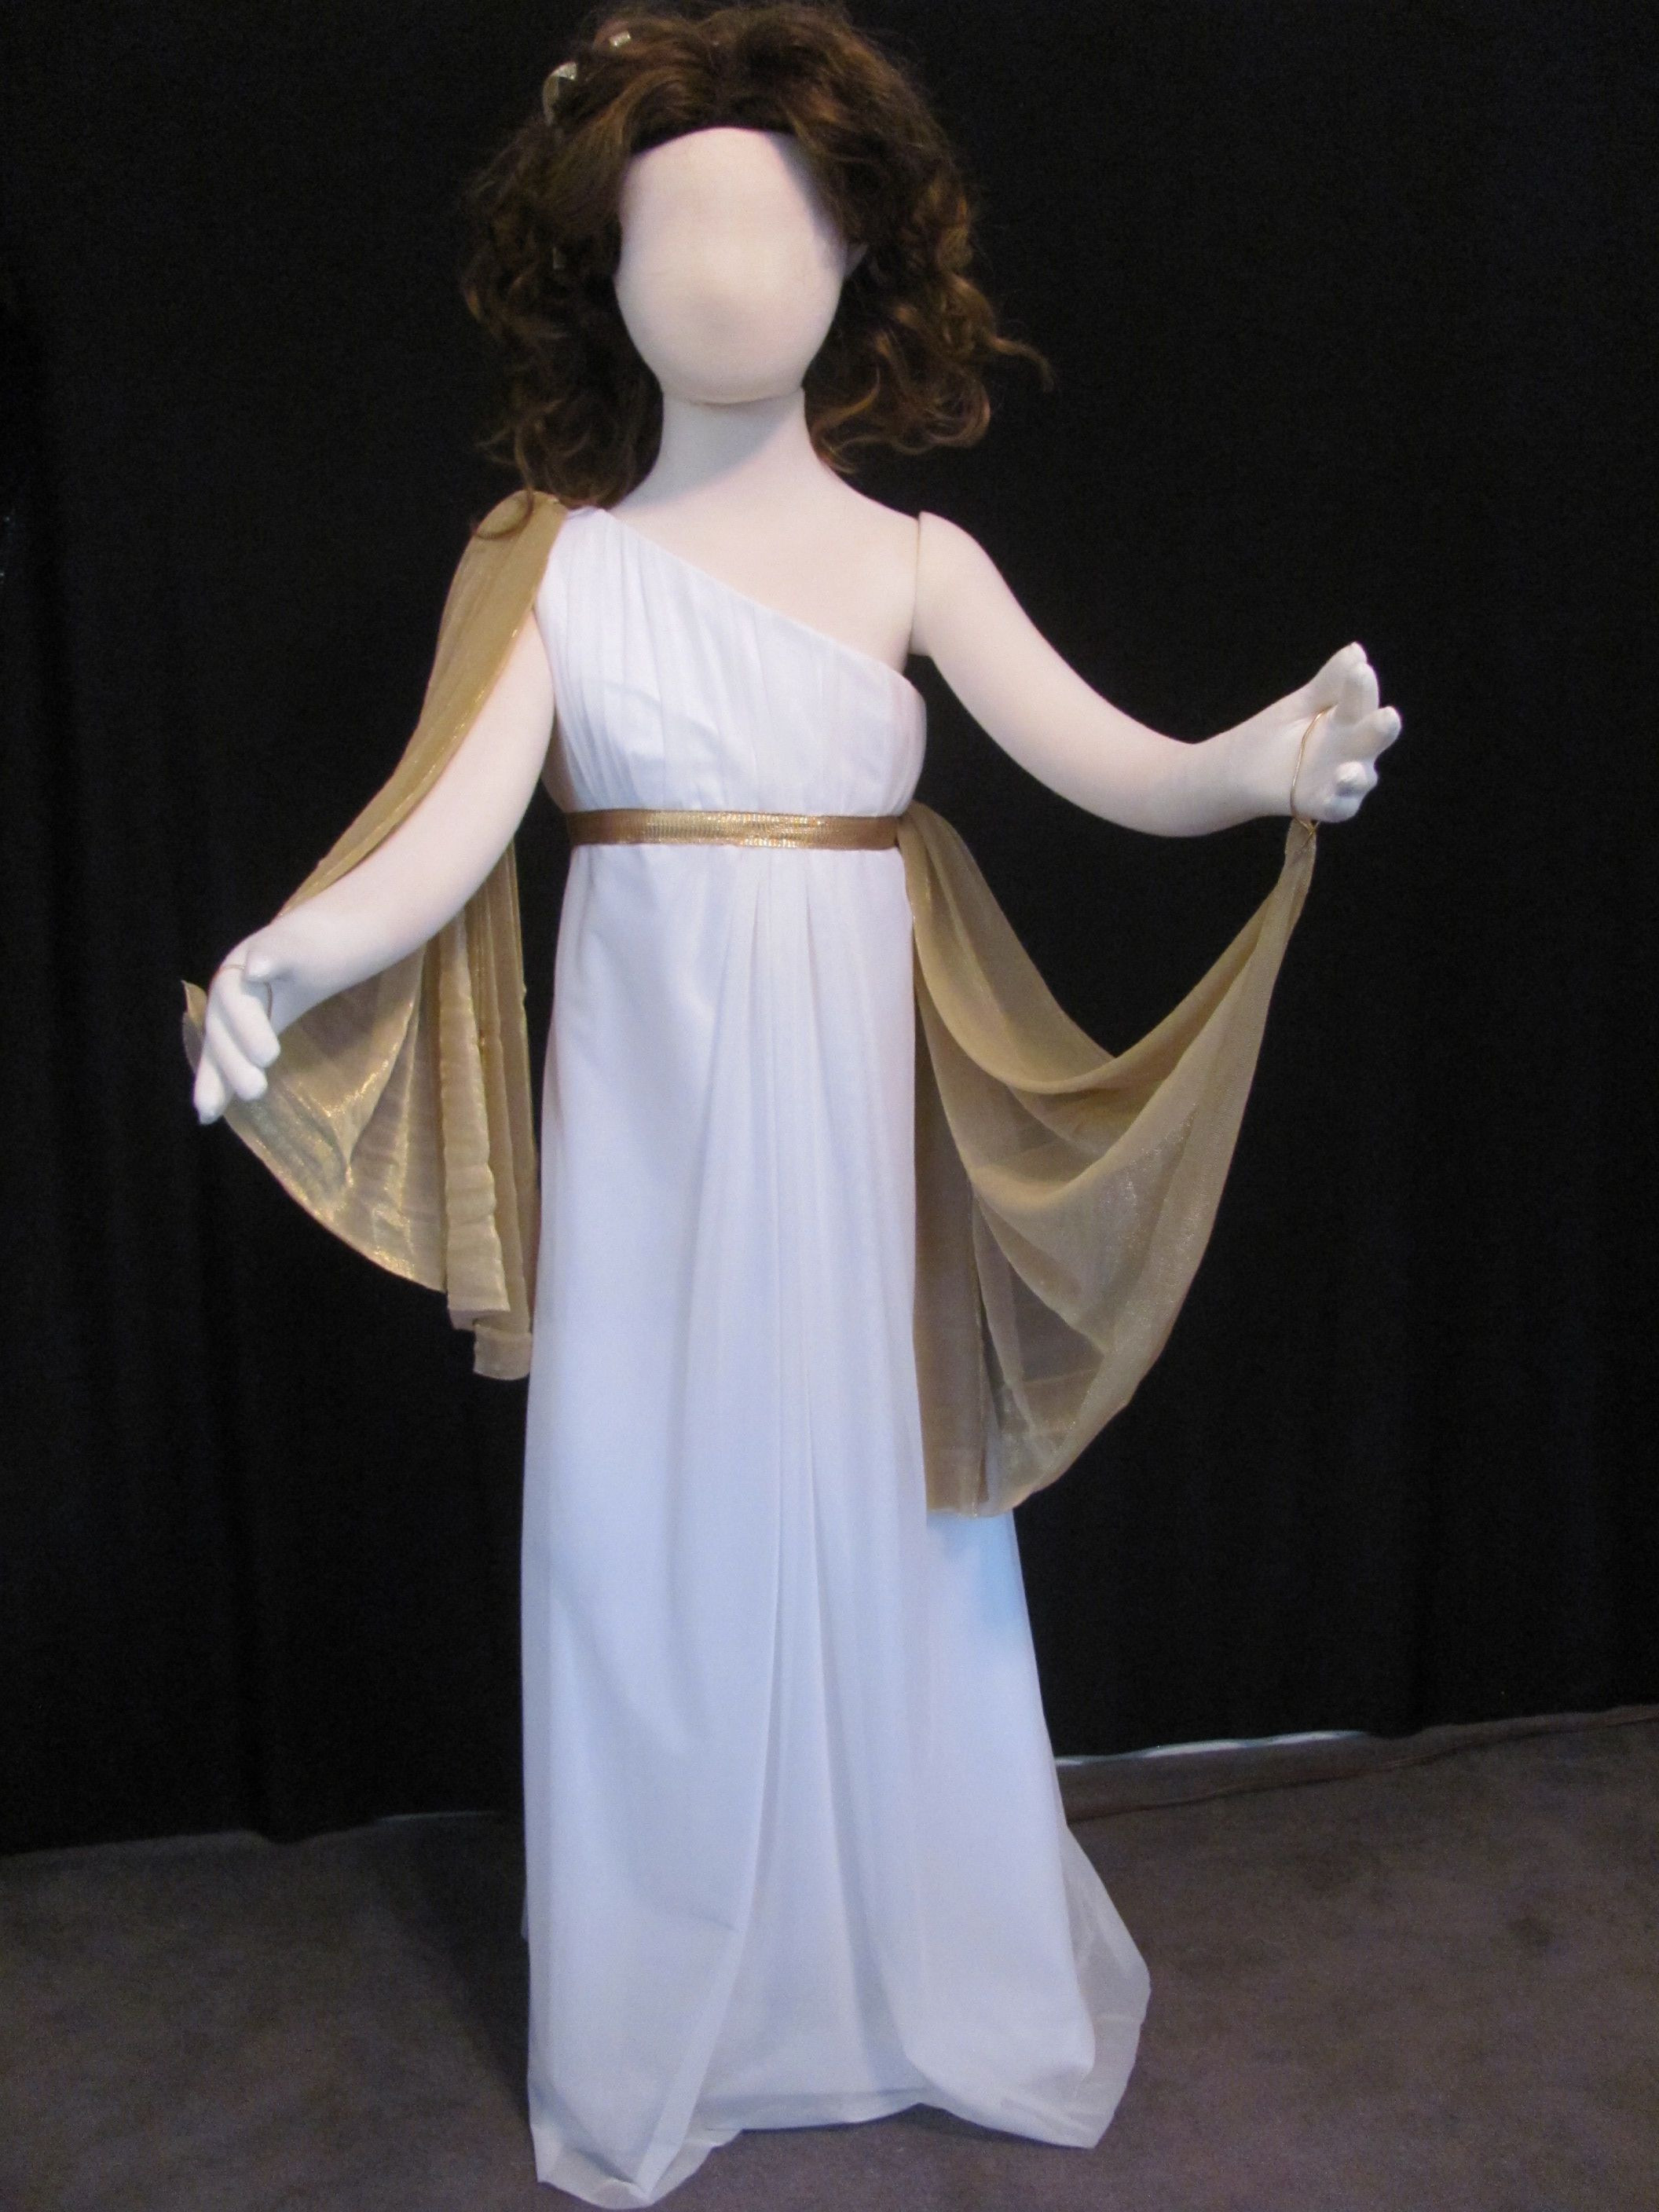 Greek Goddess Costume DIY
 Greek Goddess or Medusa costume for a child The gold wrap